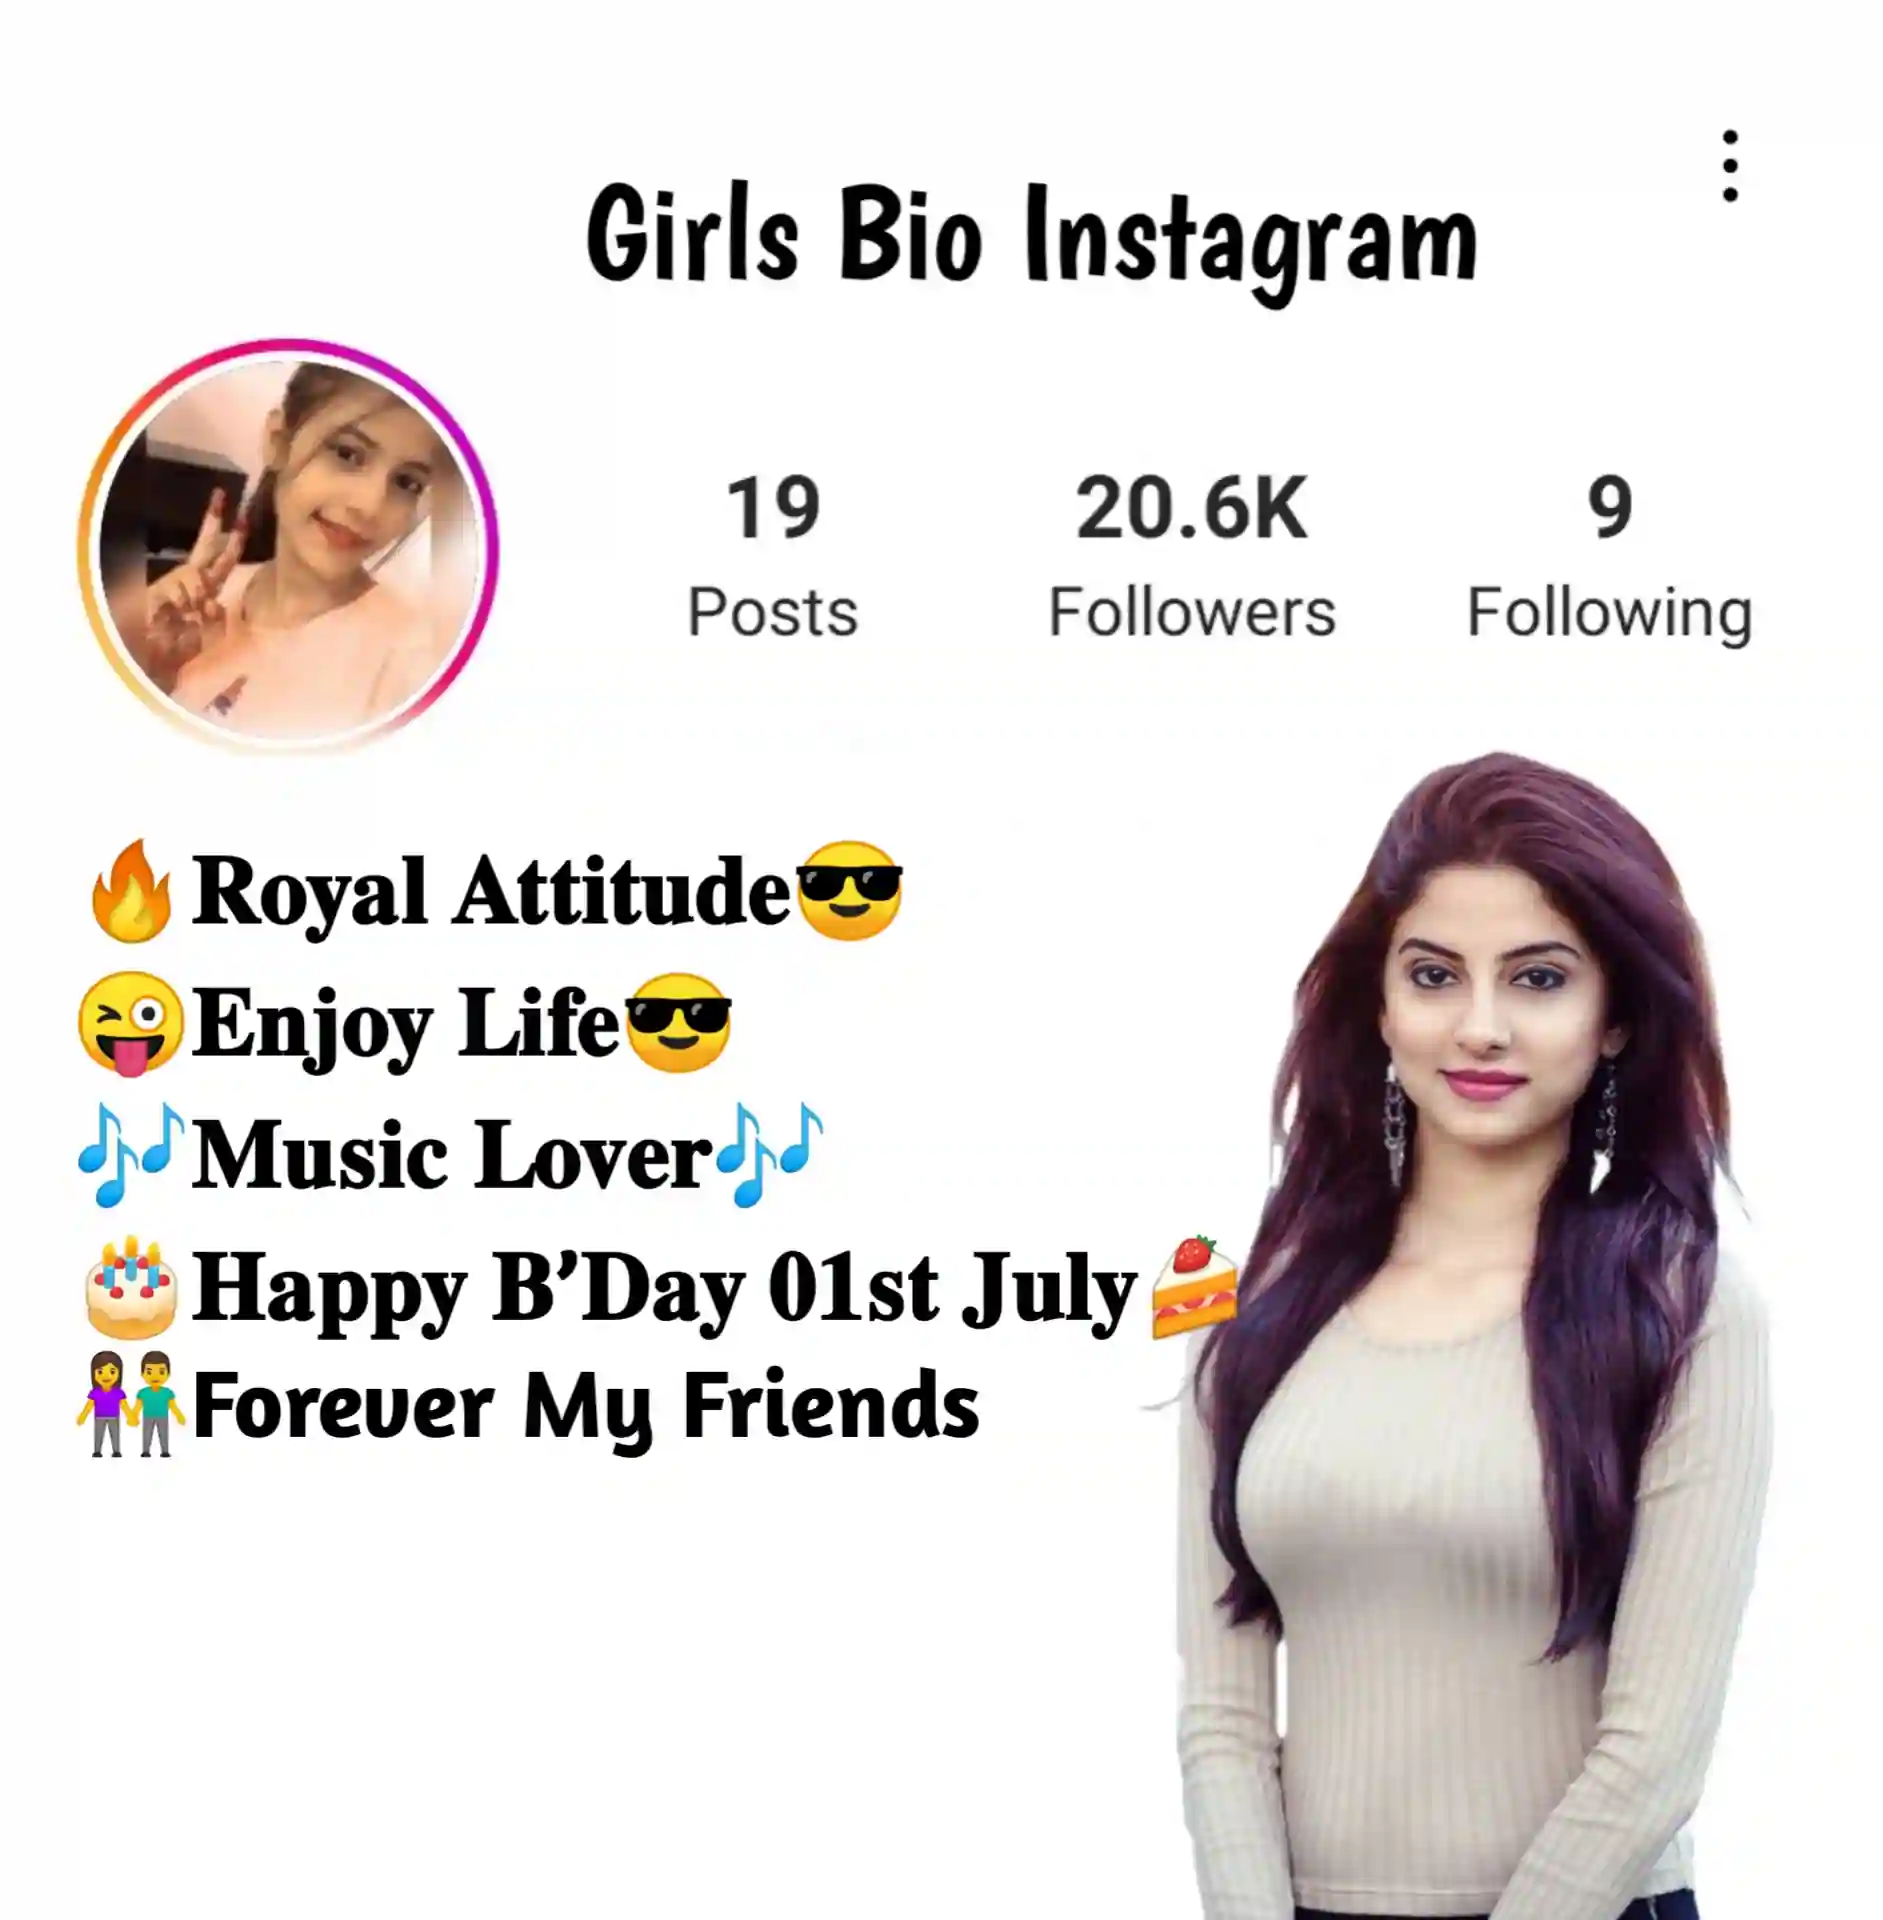 Best Instagram Bio for Girls